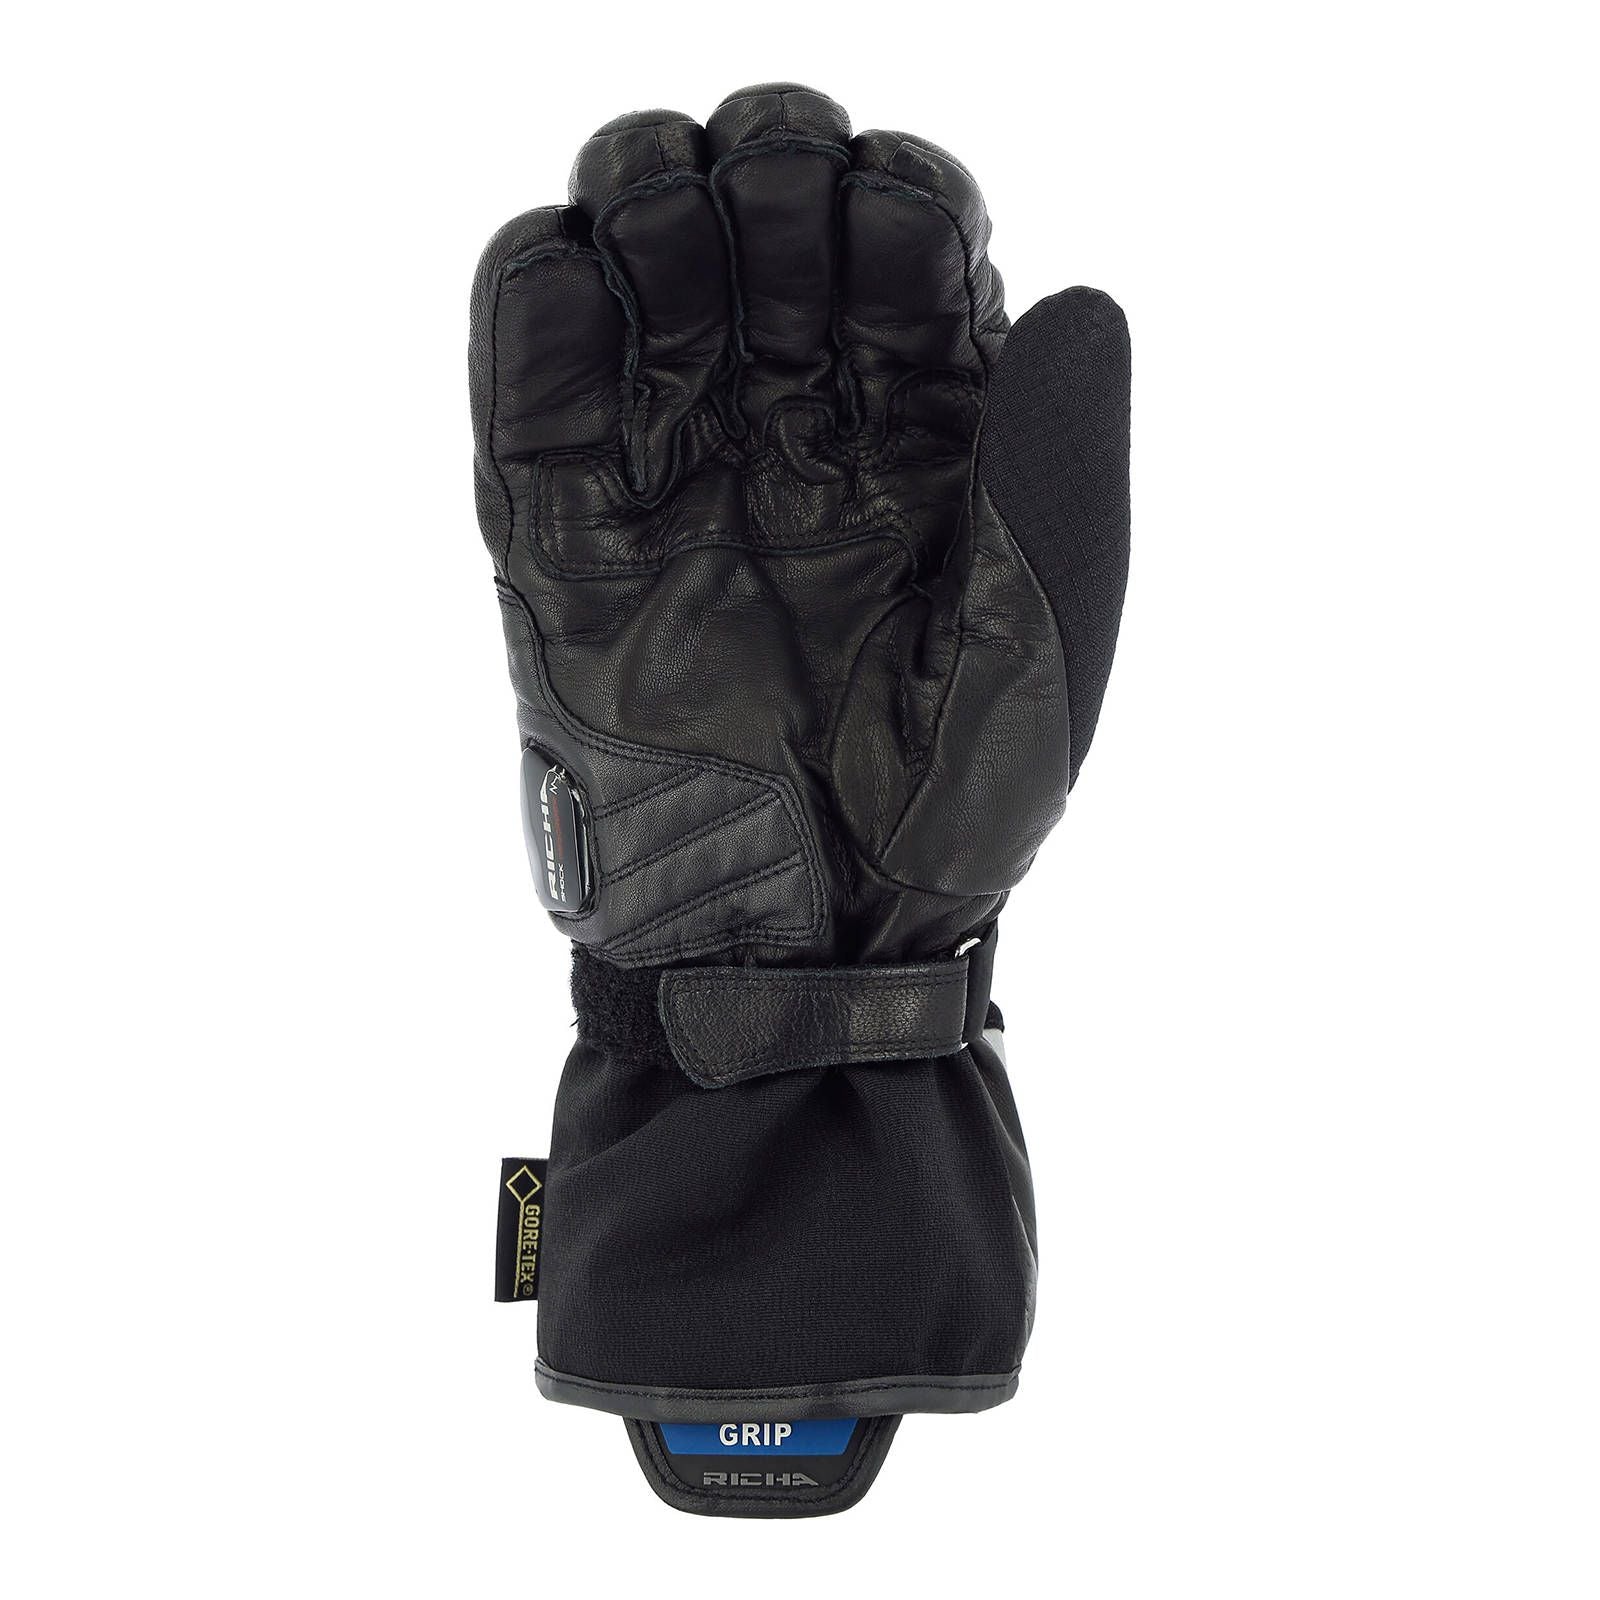 New RICHA Level 2-In-1 All-Season Gore-Tex Glove - Black (XL) #RAGLEBXL